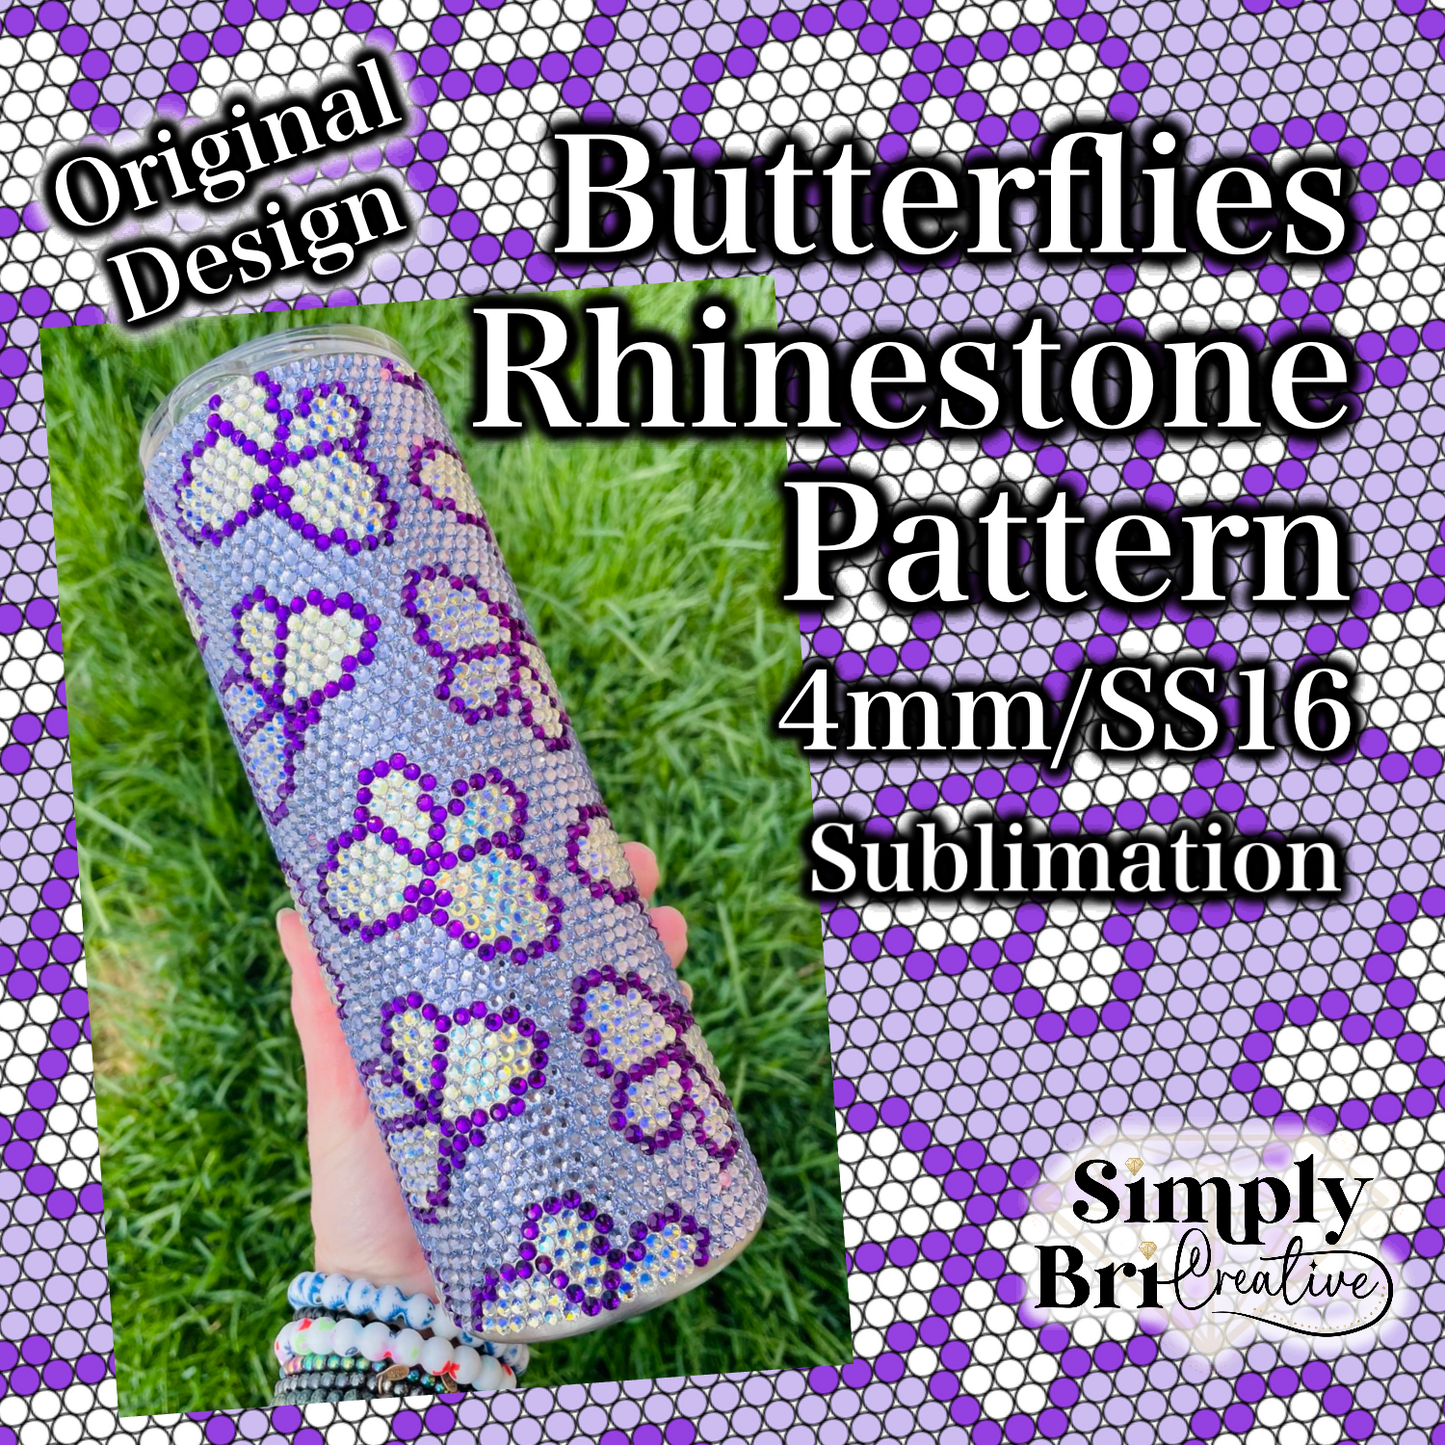 Butterflies Sublimation Rhinestone Pattern (4mm/SS16)